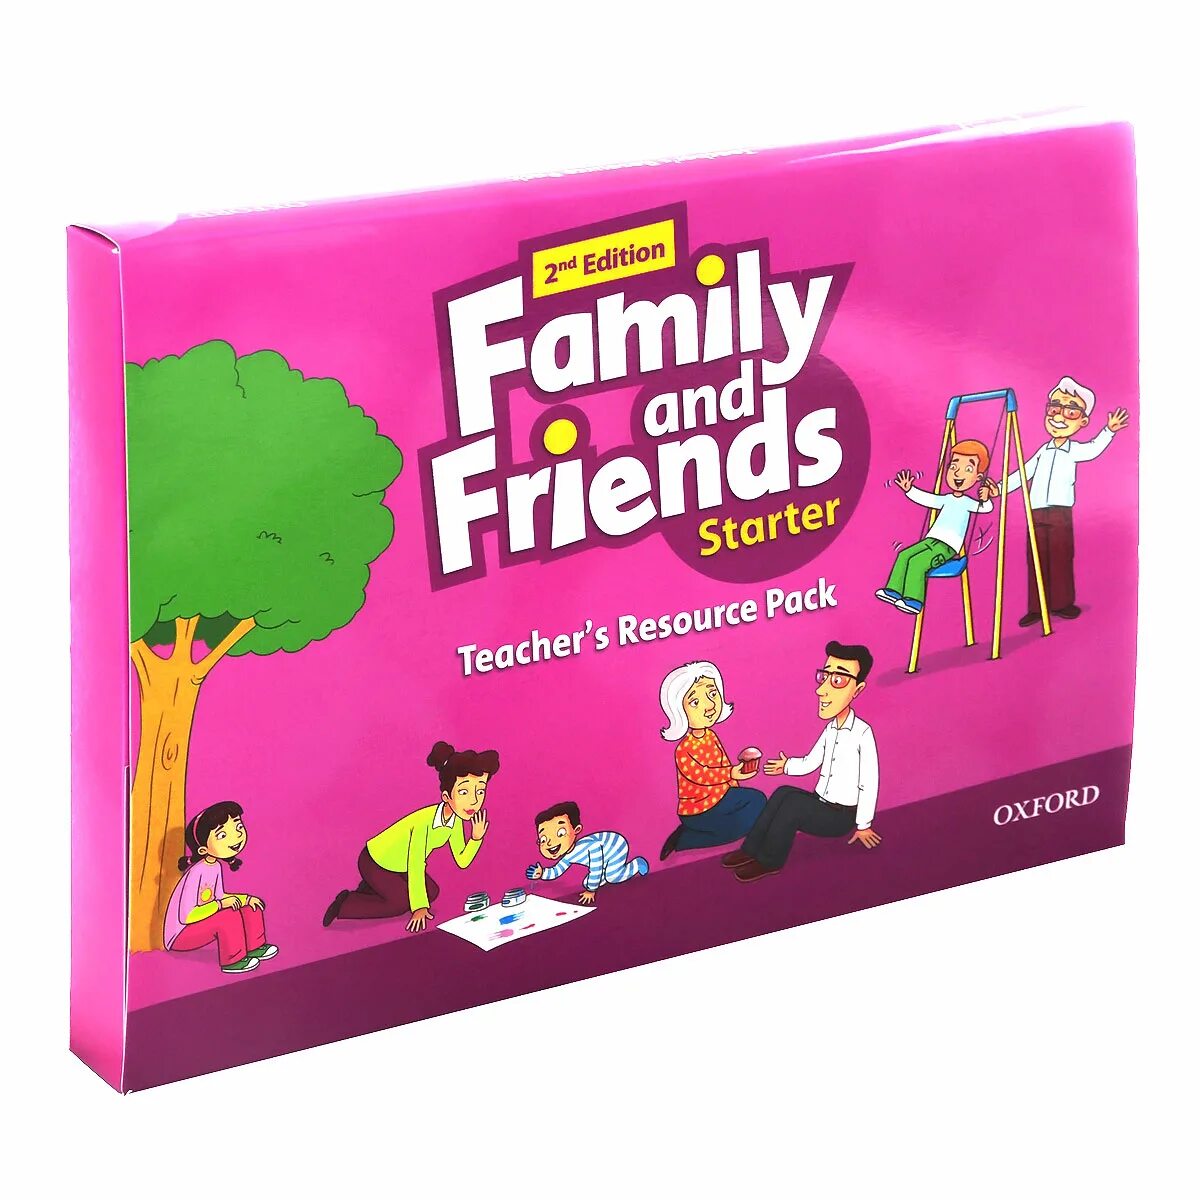 Friends starter book. Family and friends Starter книга. Фэмили френдс стартер. Family and friends 1 Starter. Family and friends Starter комплект.